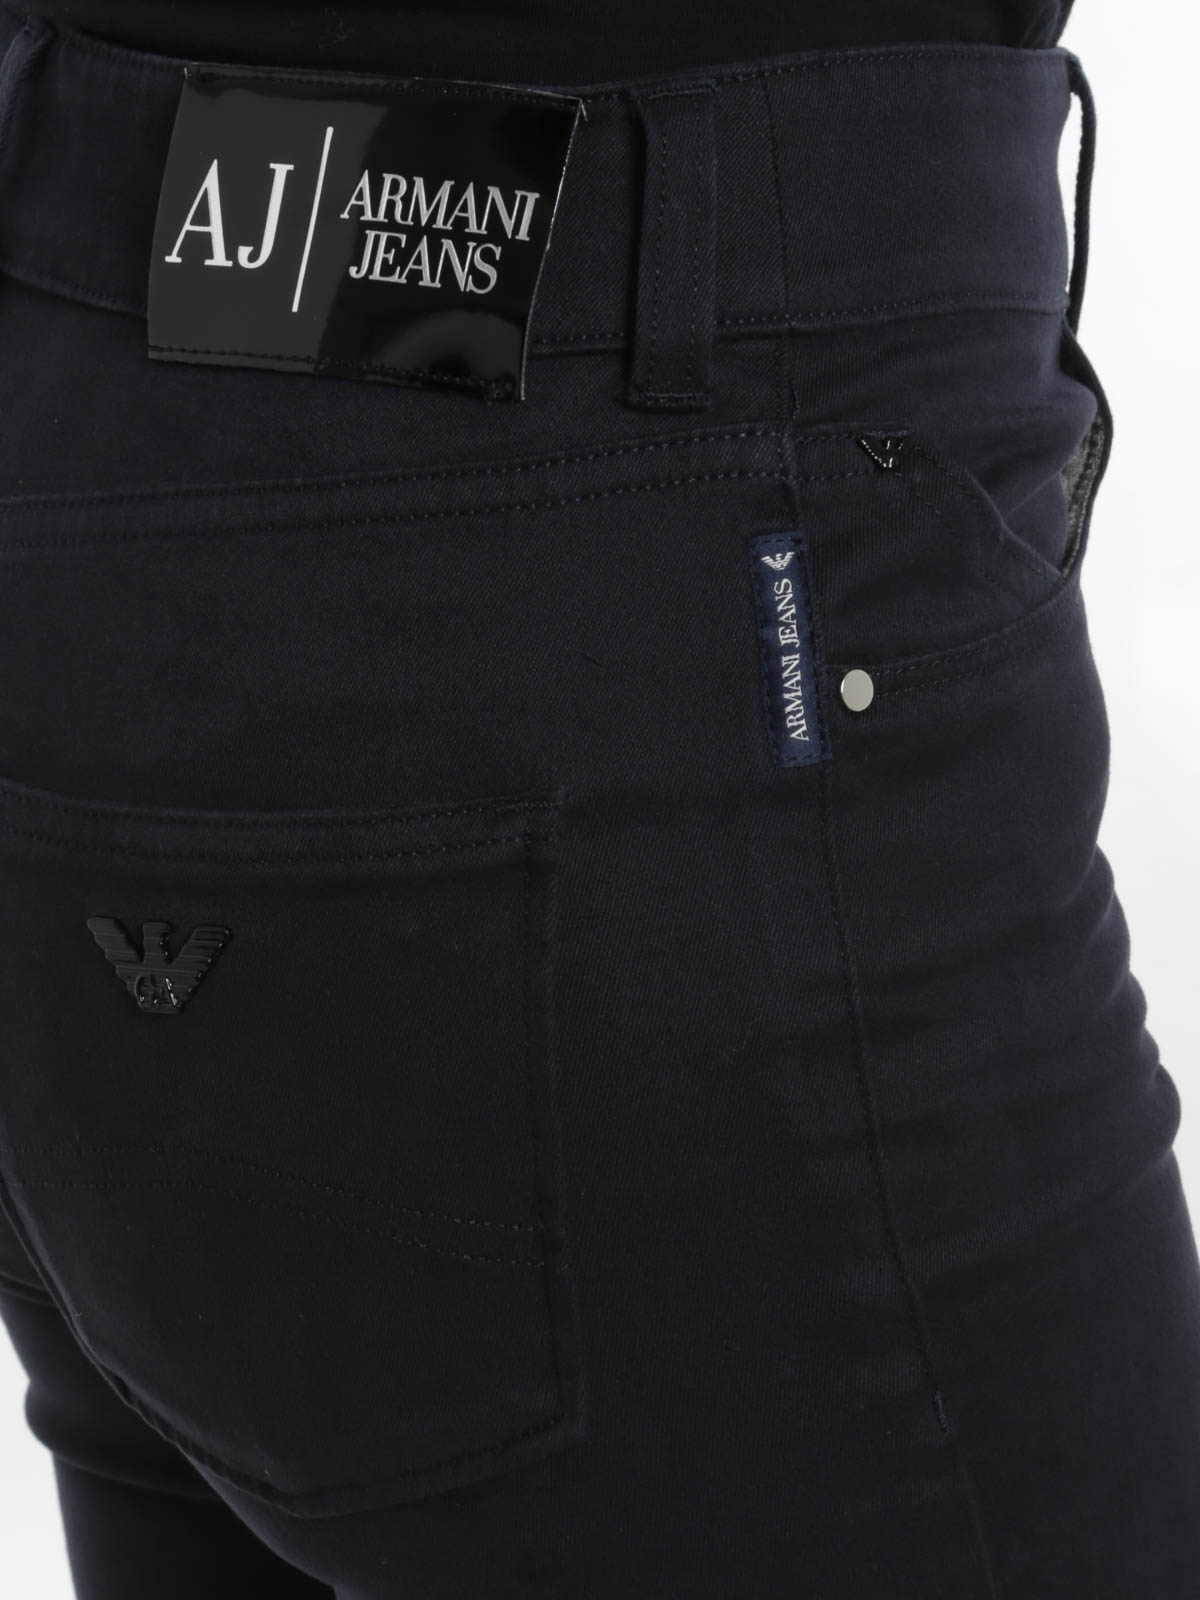 handbag armani jeans